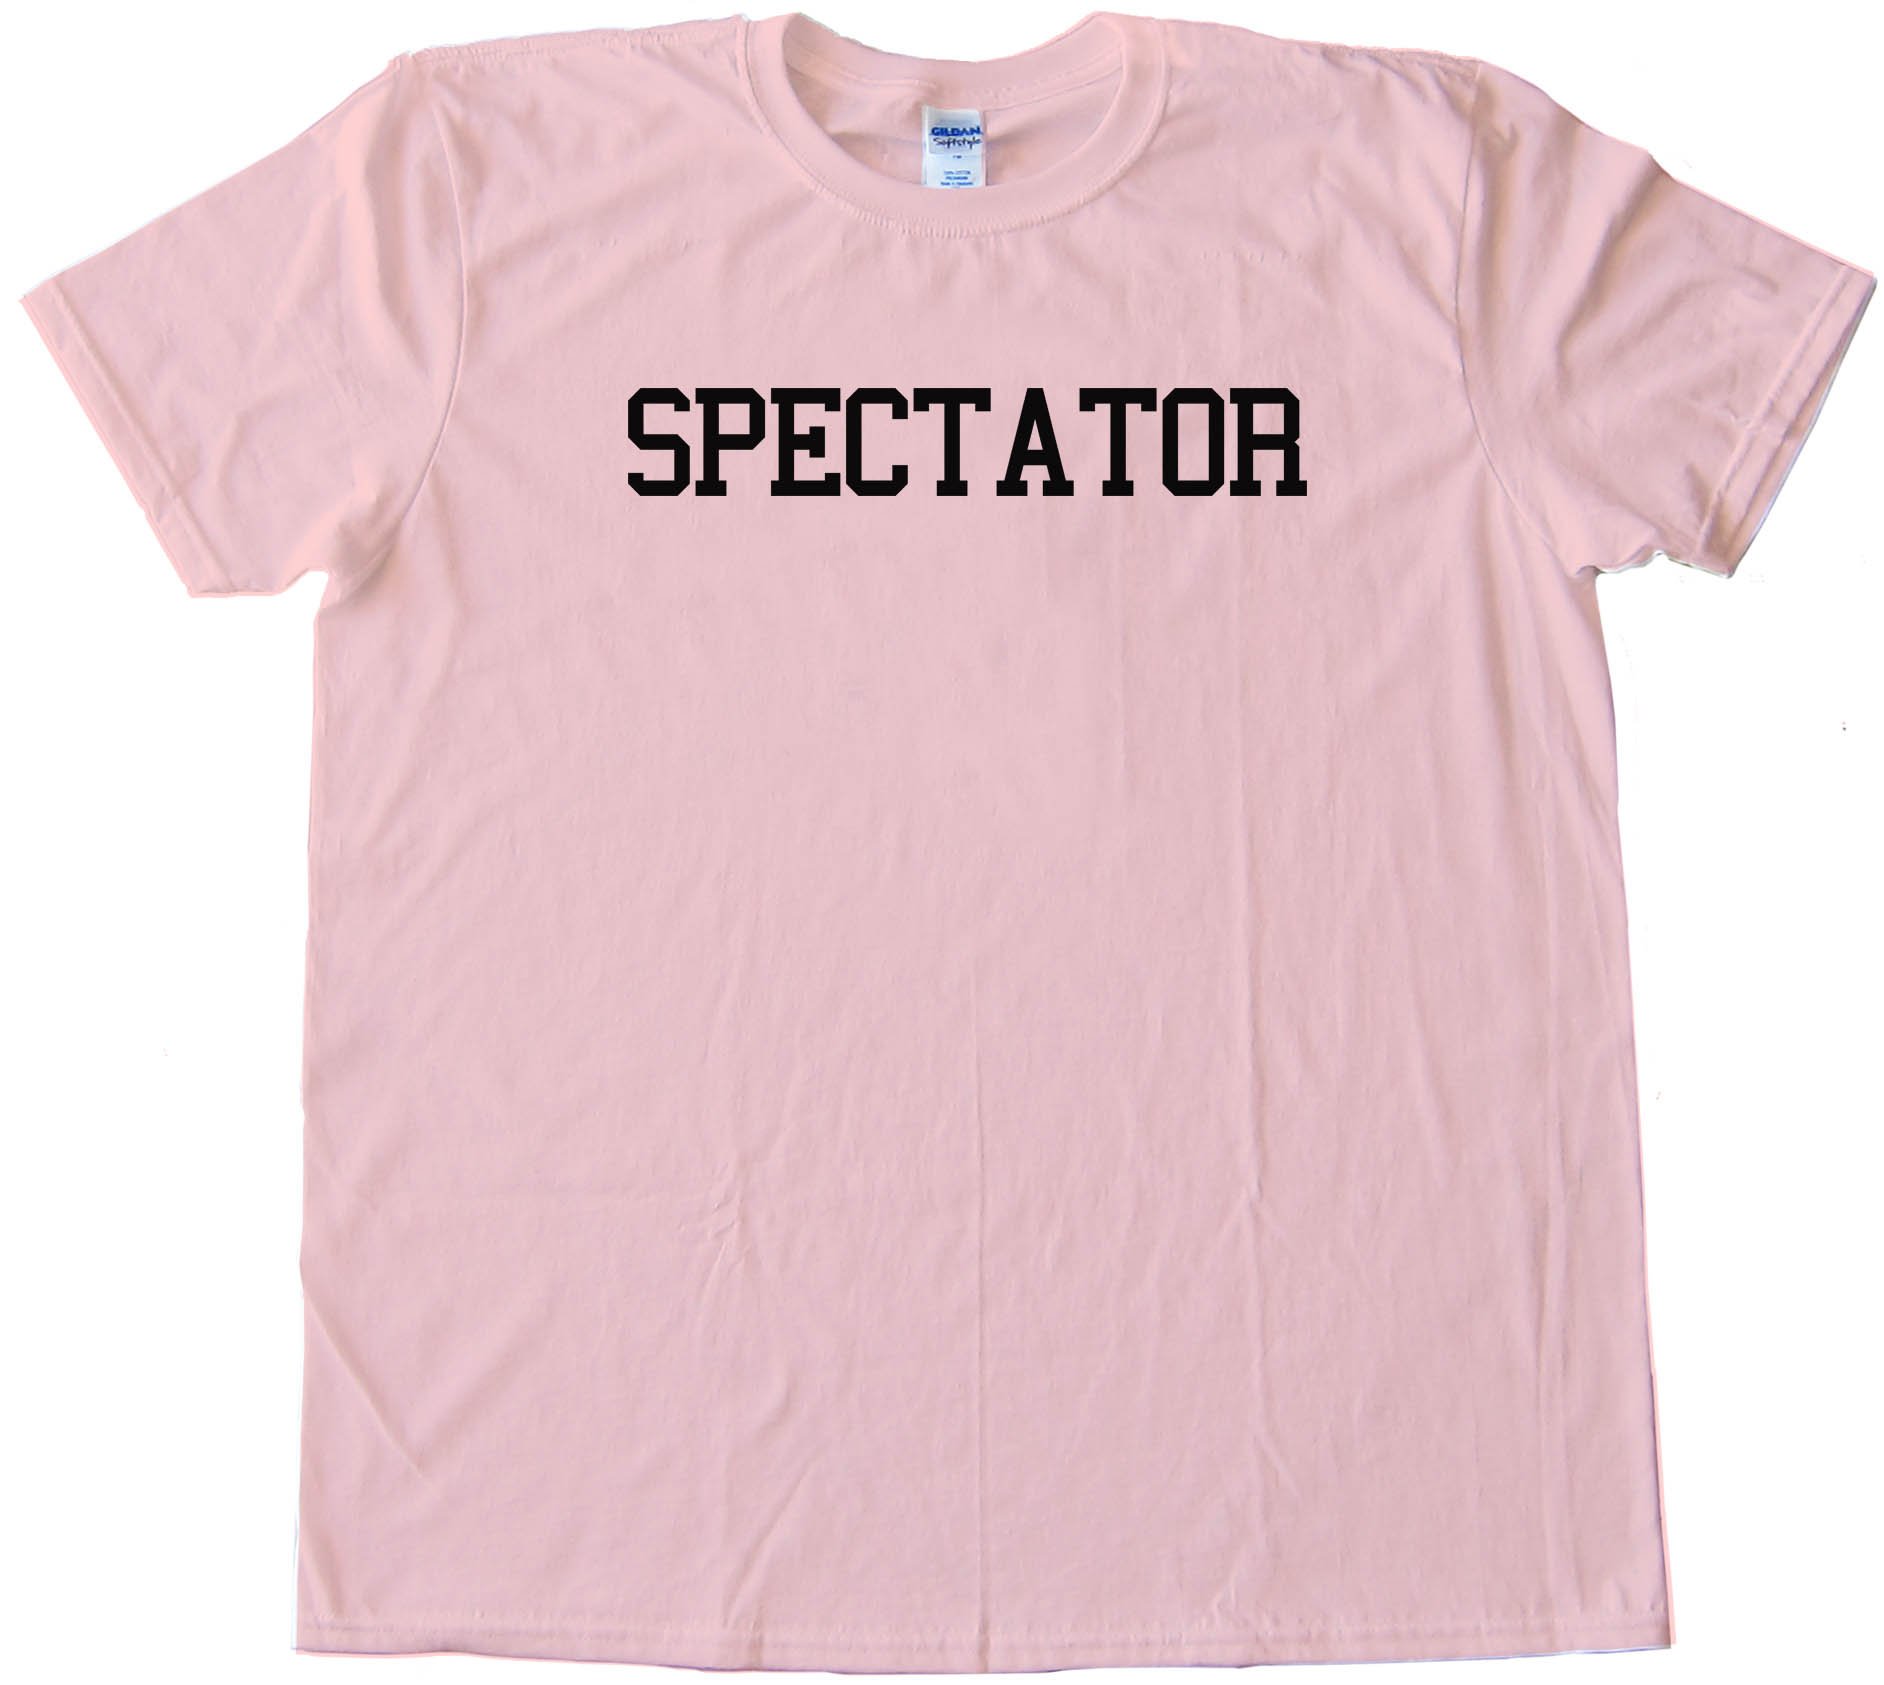 Spectator - Tee Shirt